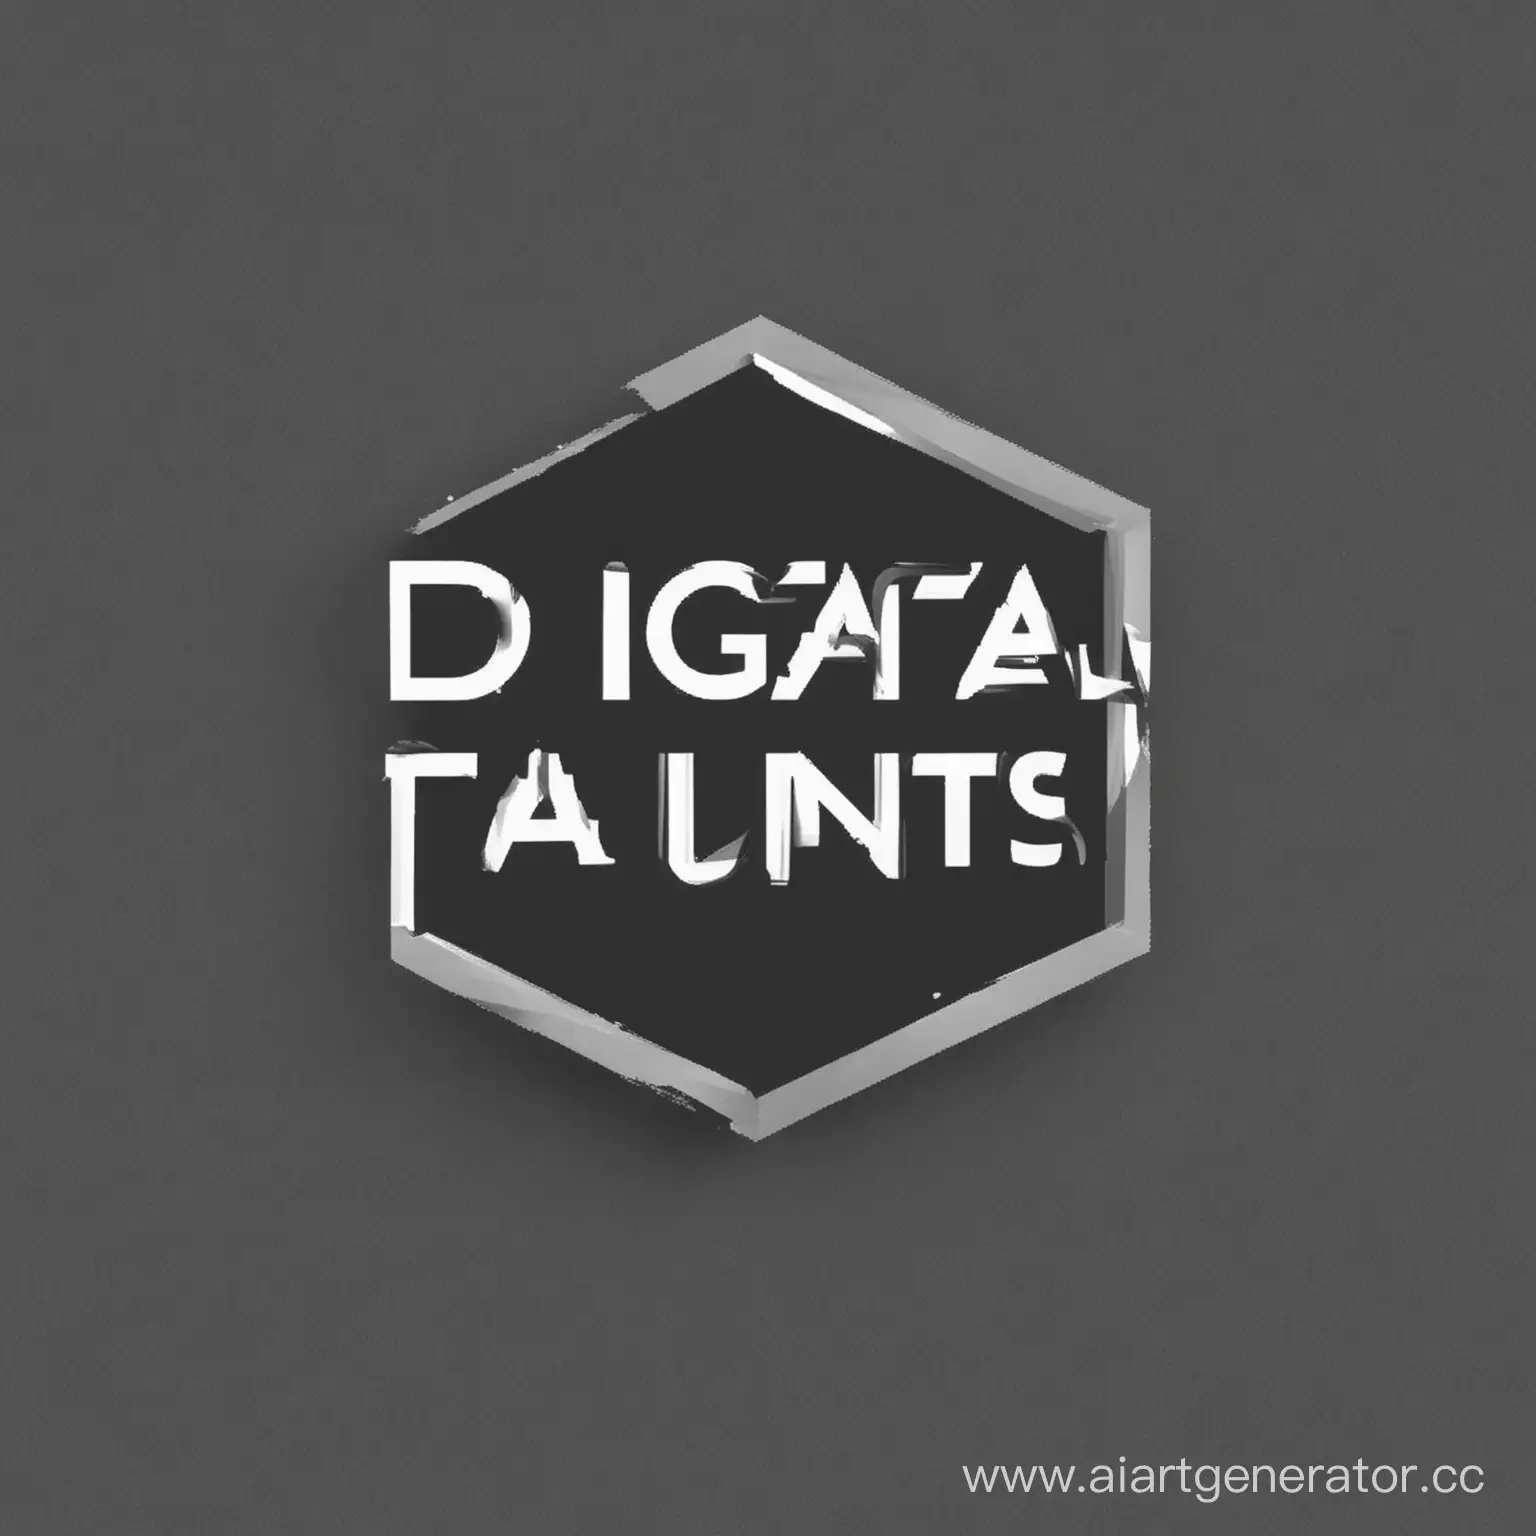 логотип цифровые таланты